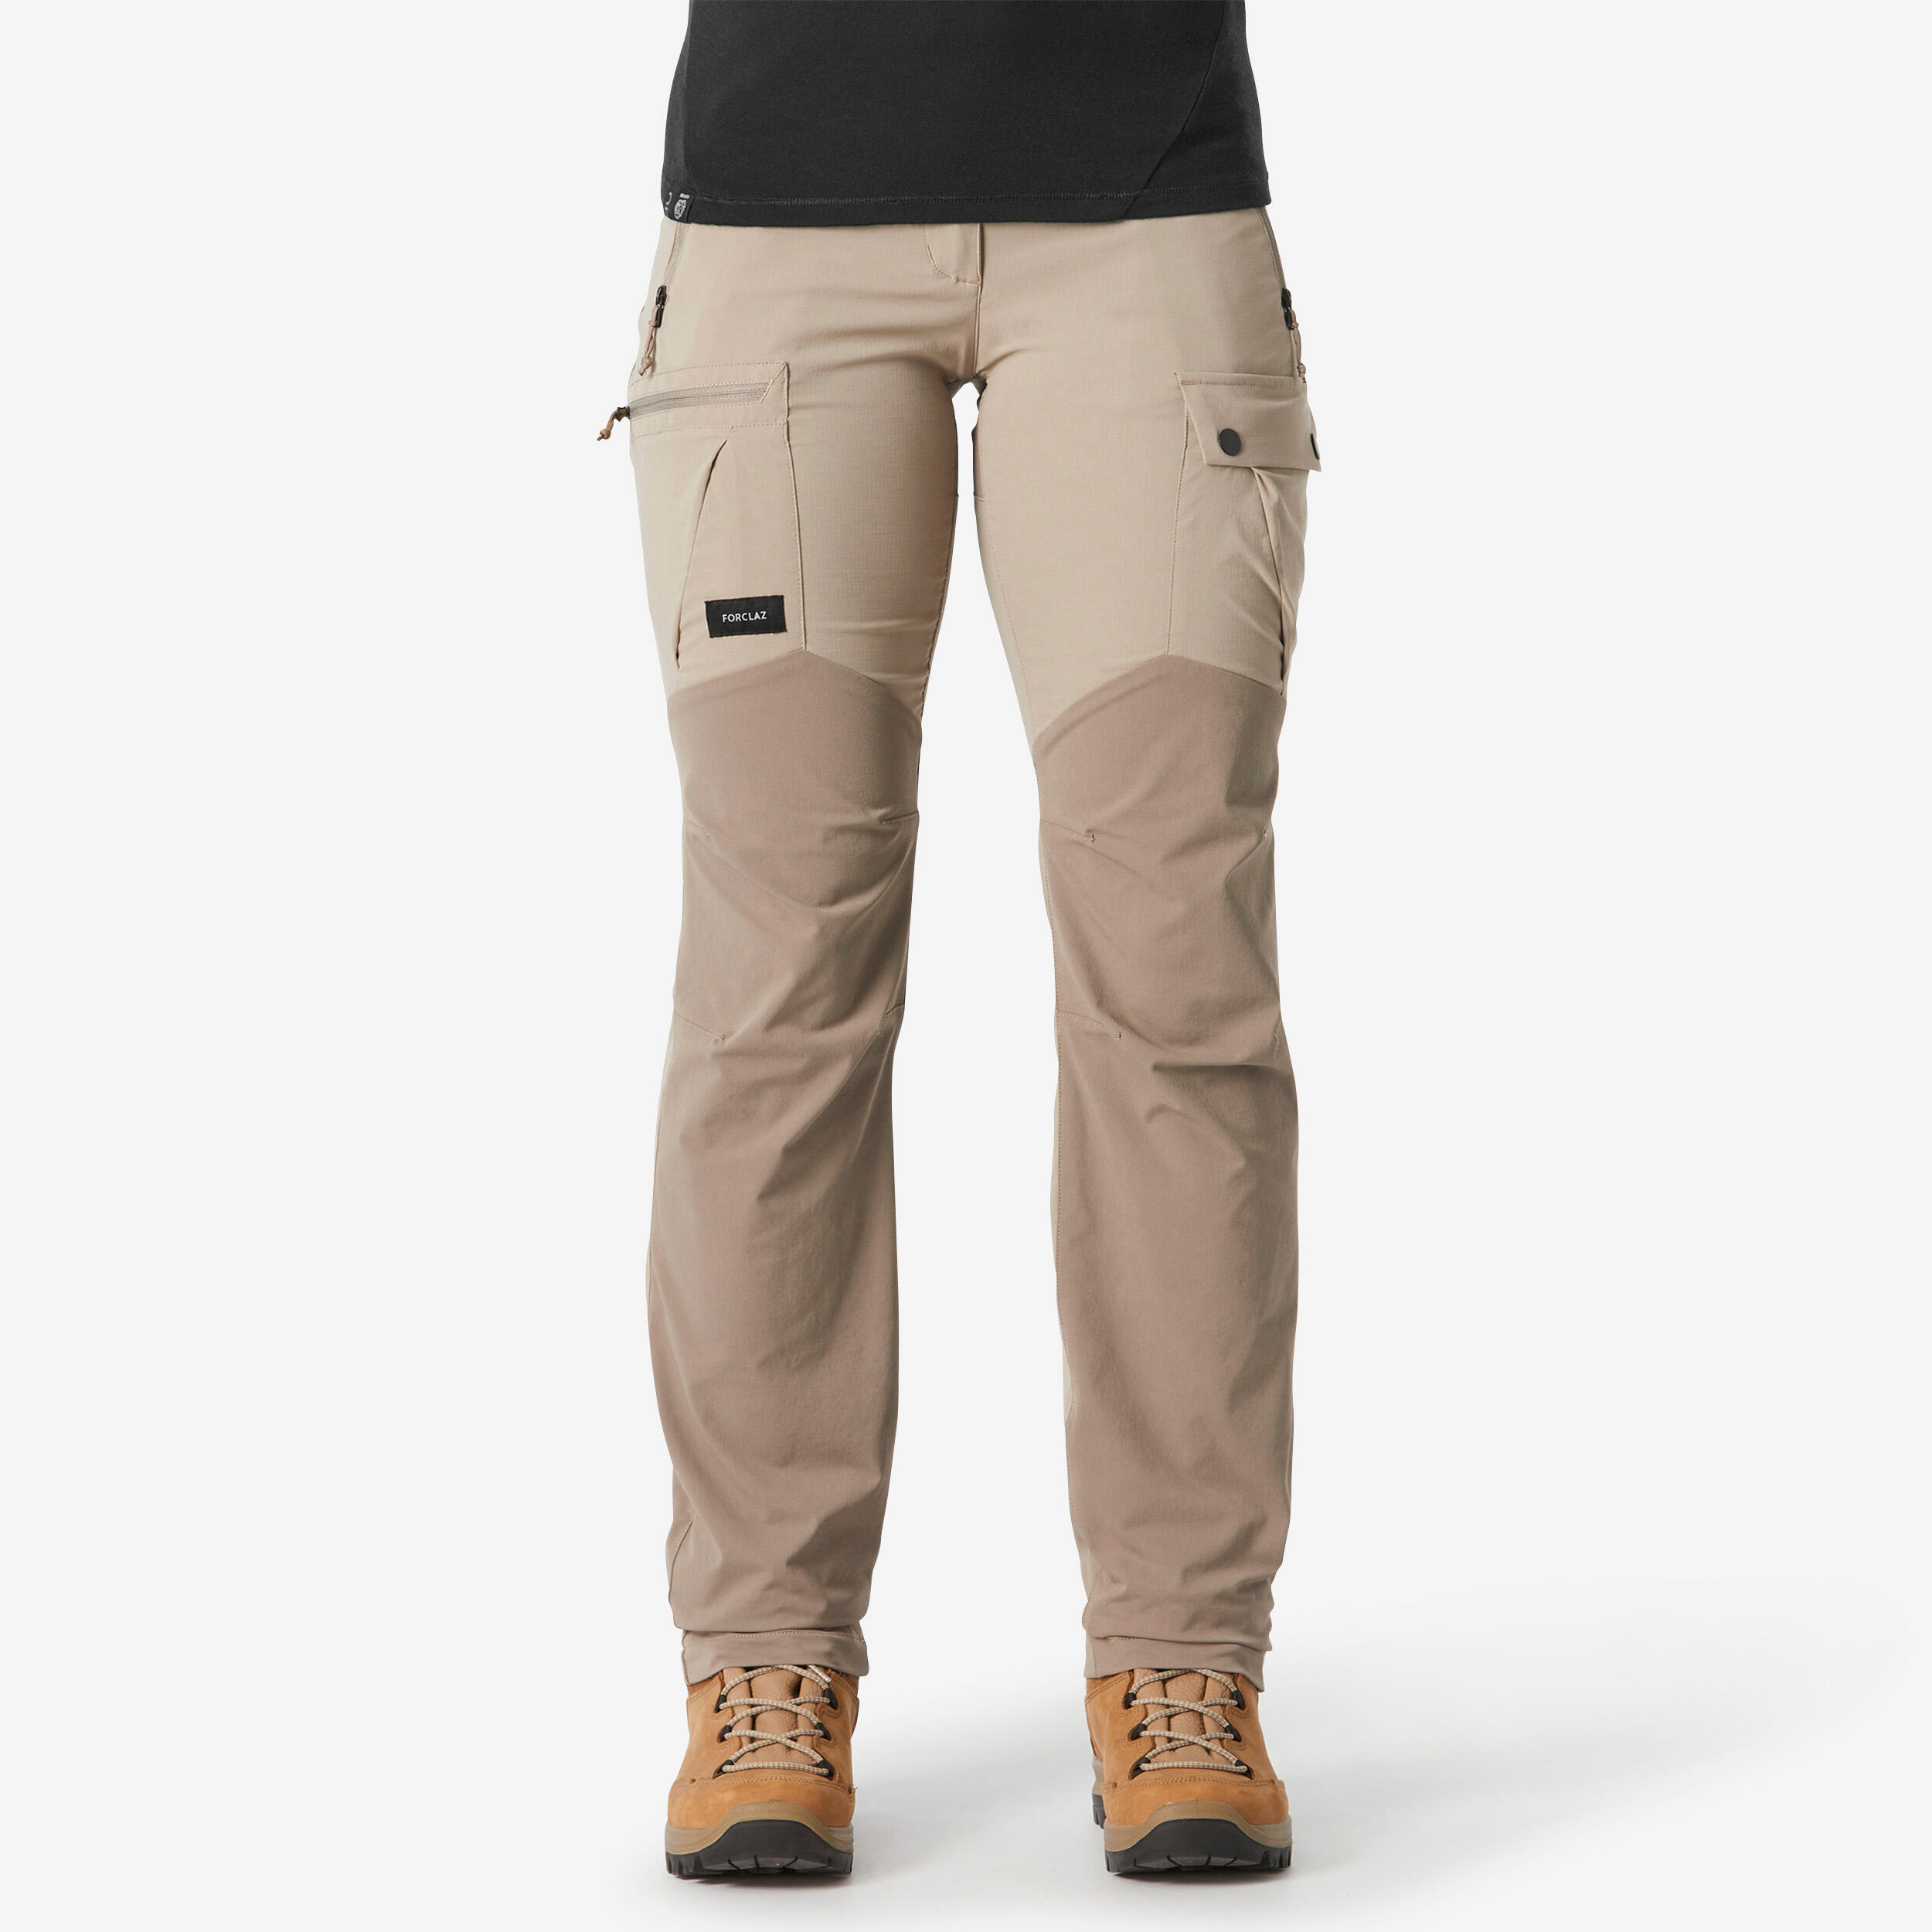 FORCLAZ Women’s Durable Mountain Trekking Trousers - MT500